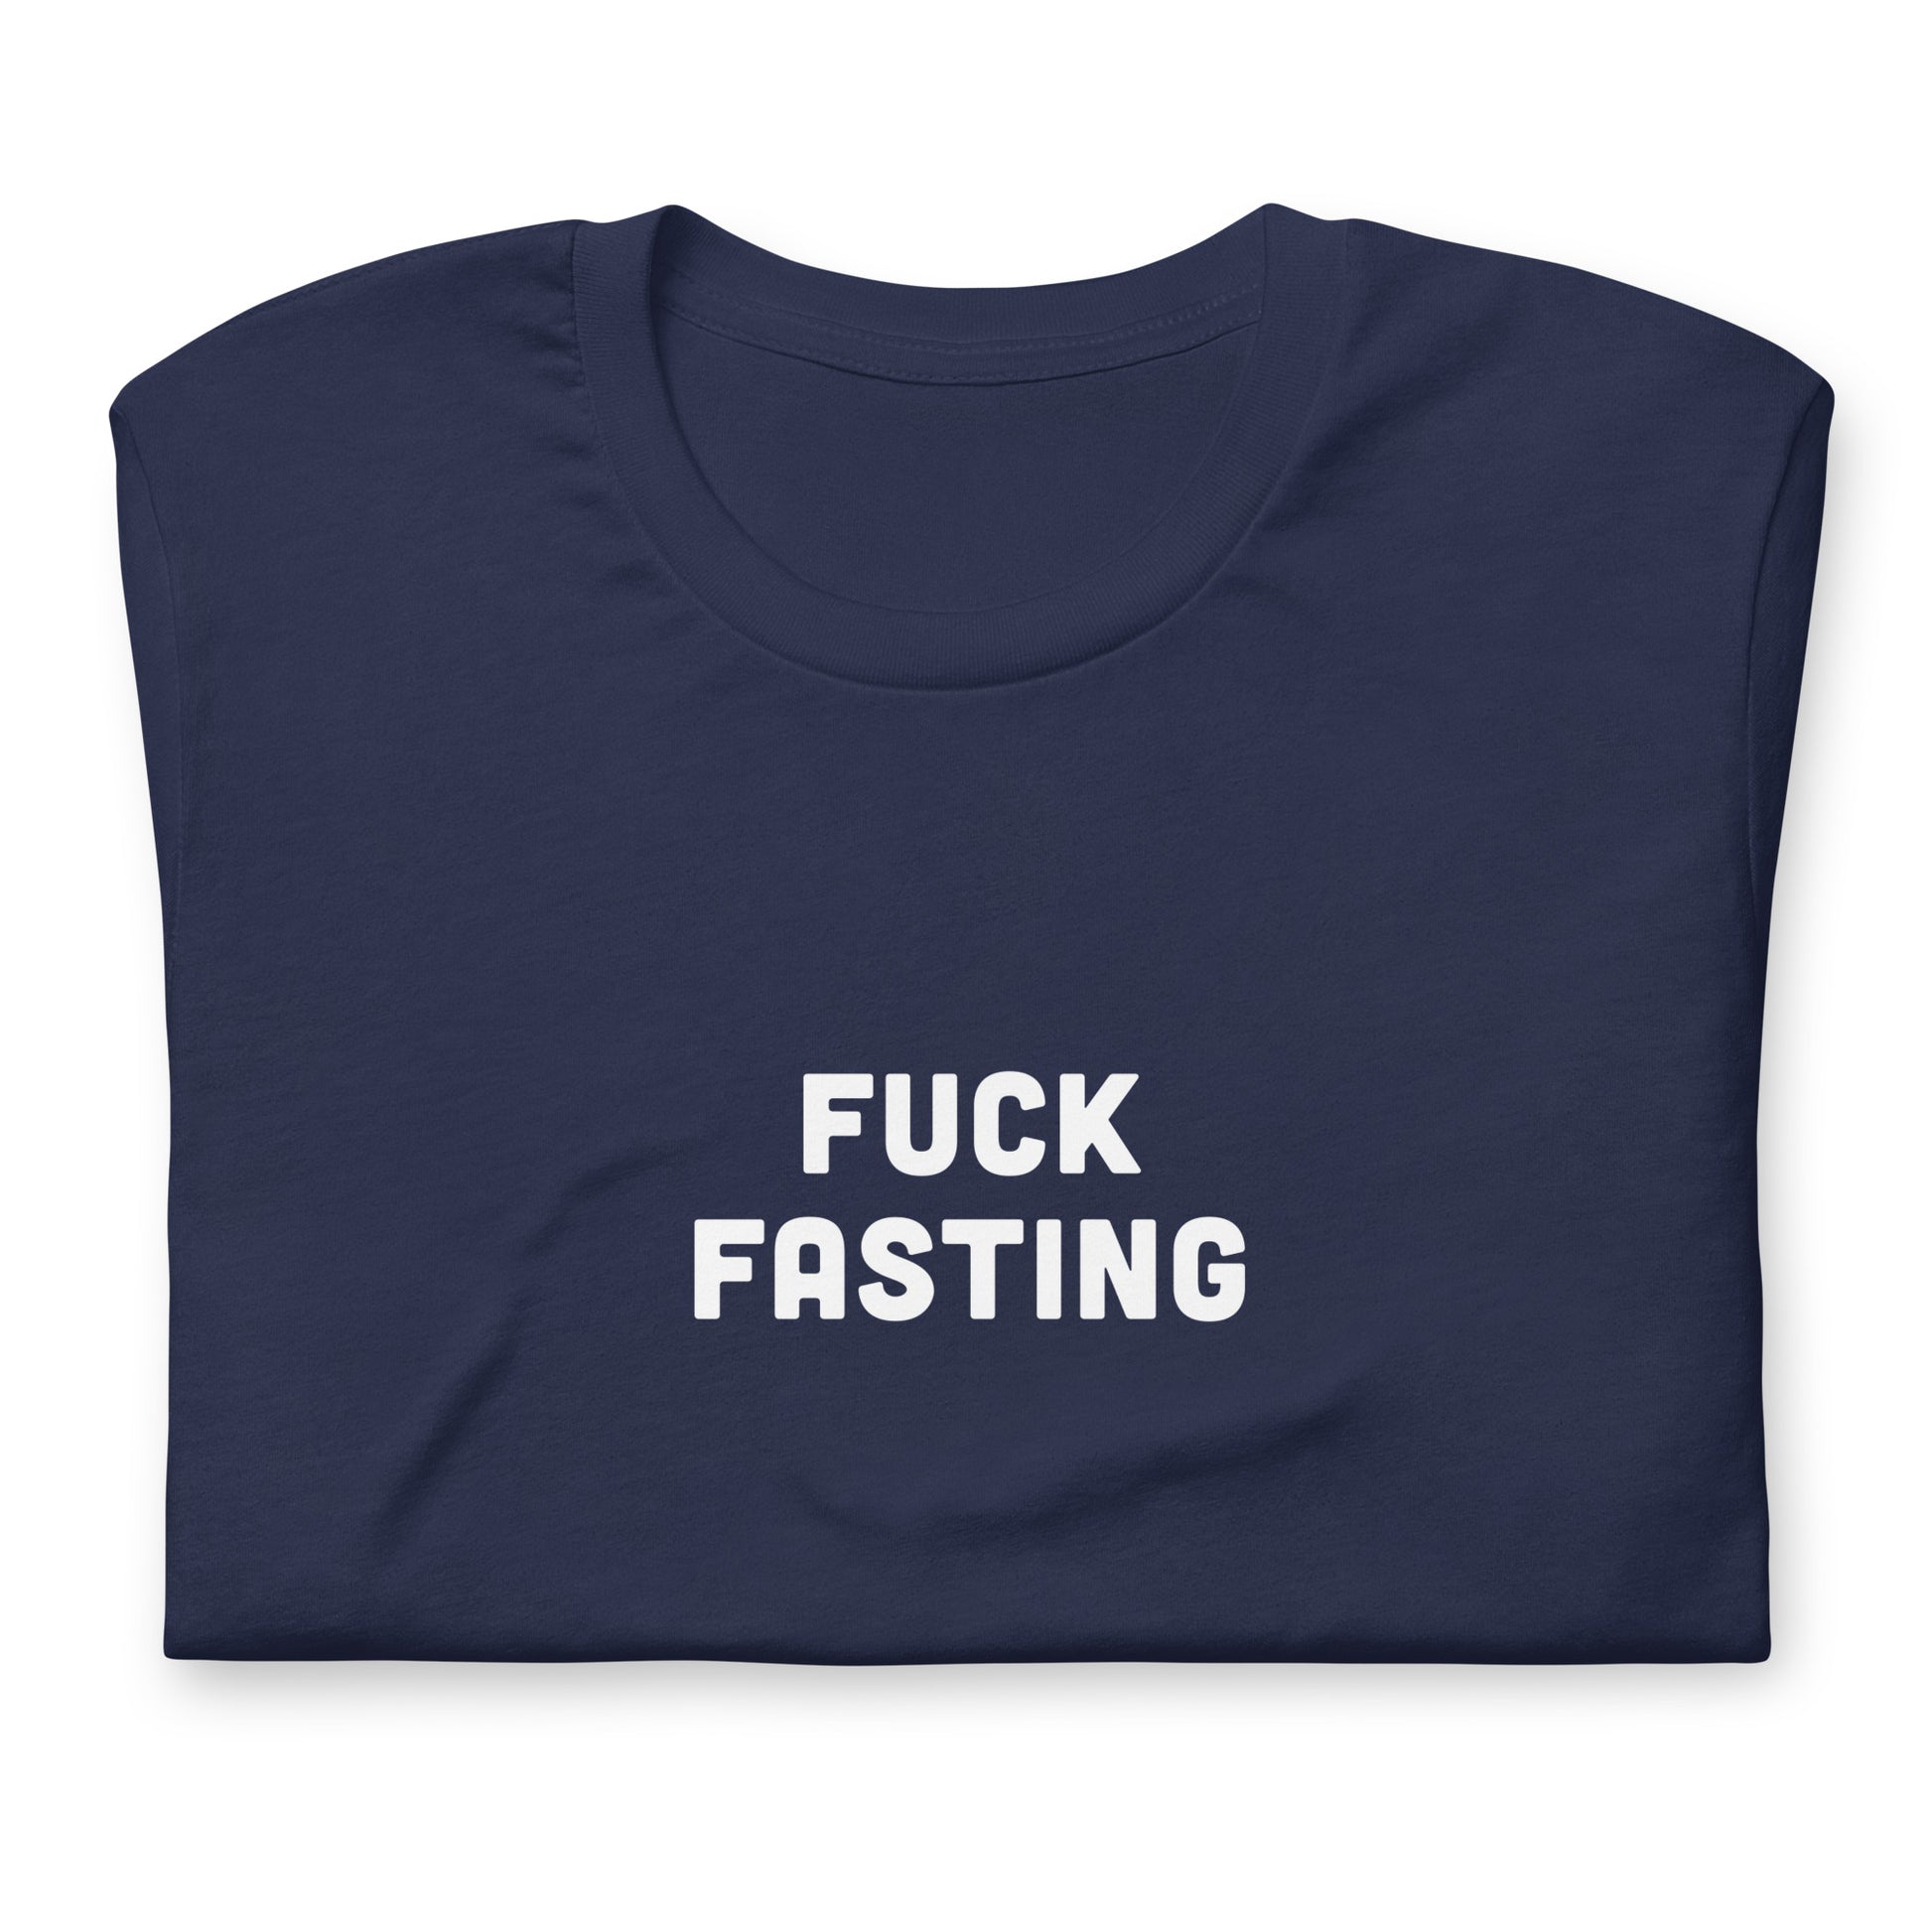 Fuck Fasting T-Shirt Size L Color Black